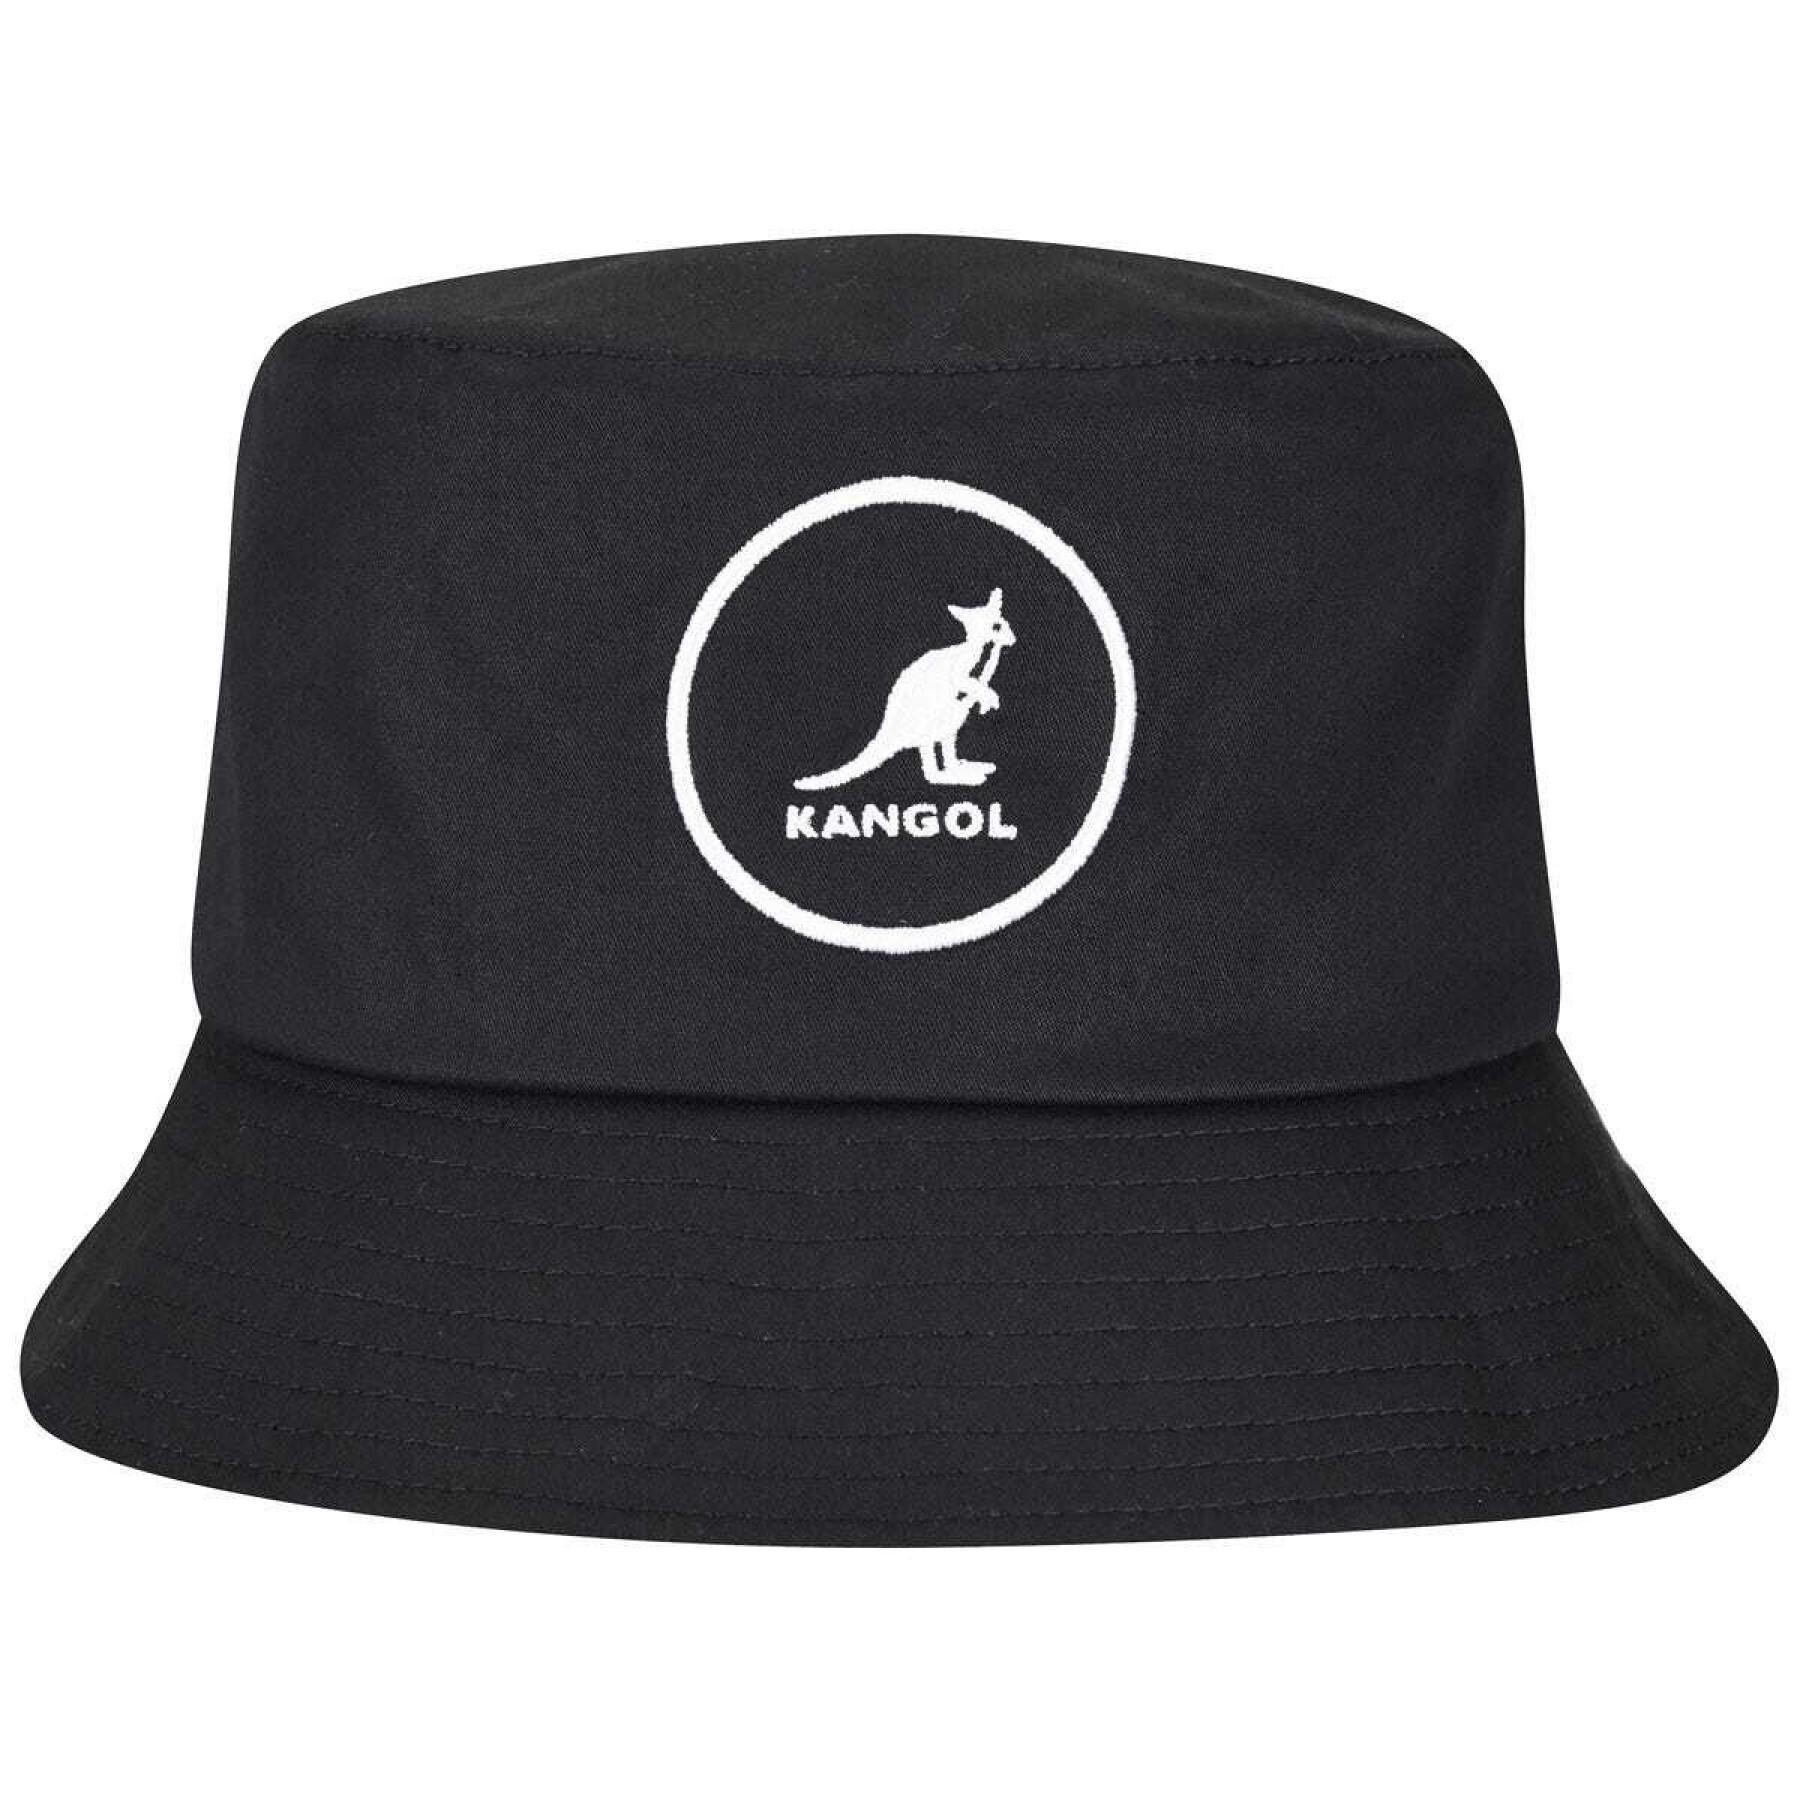 Kangol cotton bucket hat